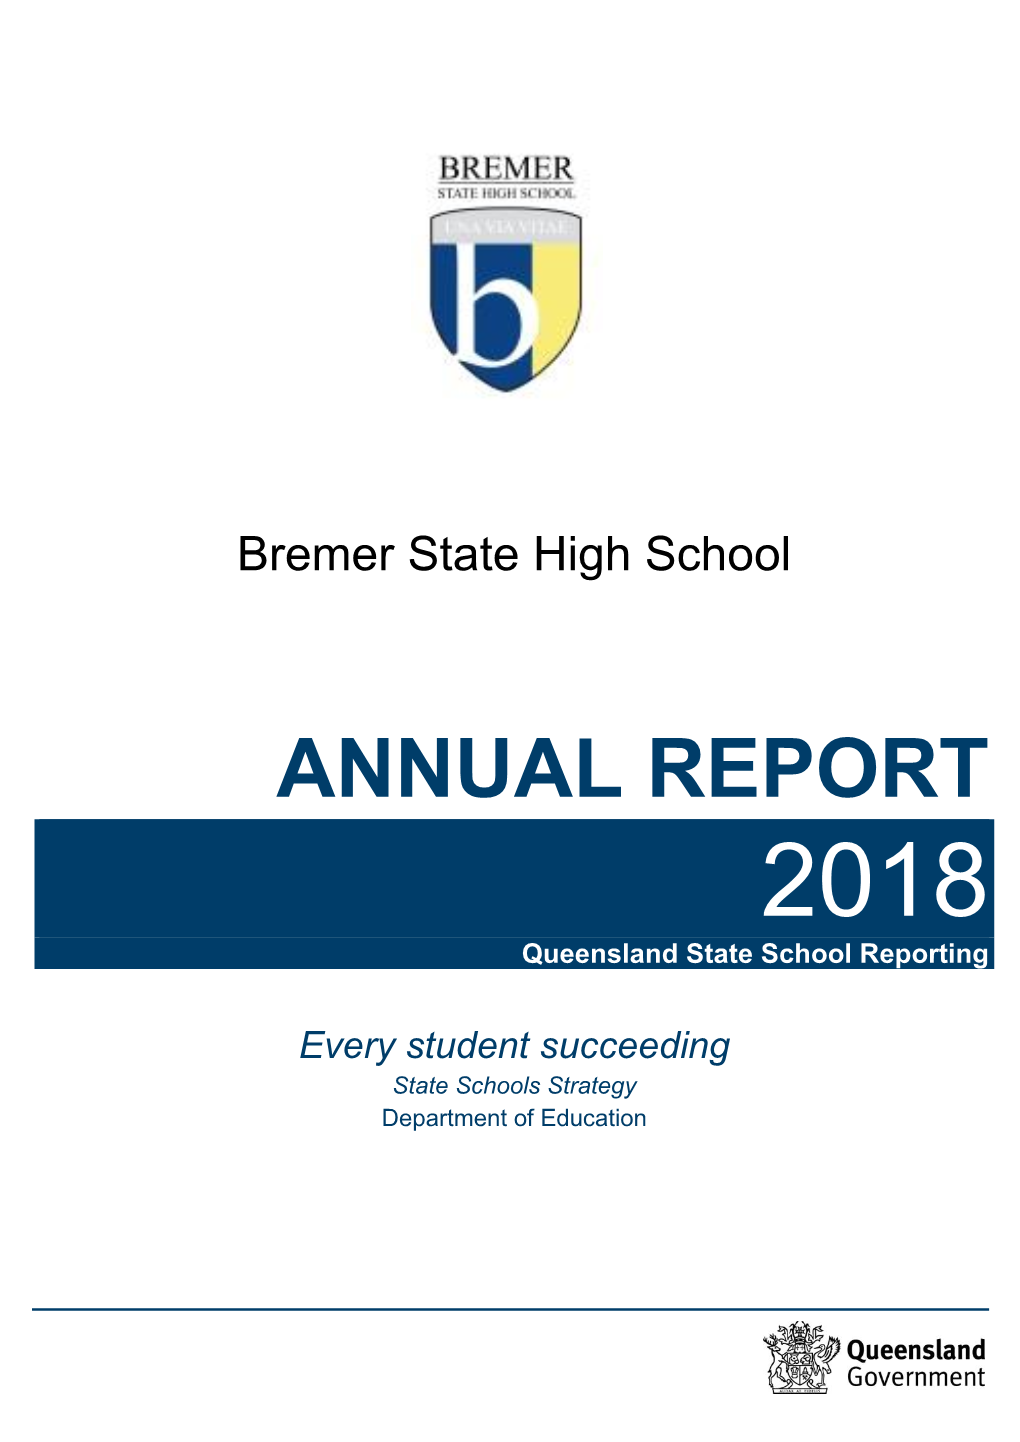 2018 Annual Report 1 Bremer State High School